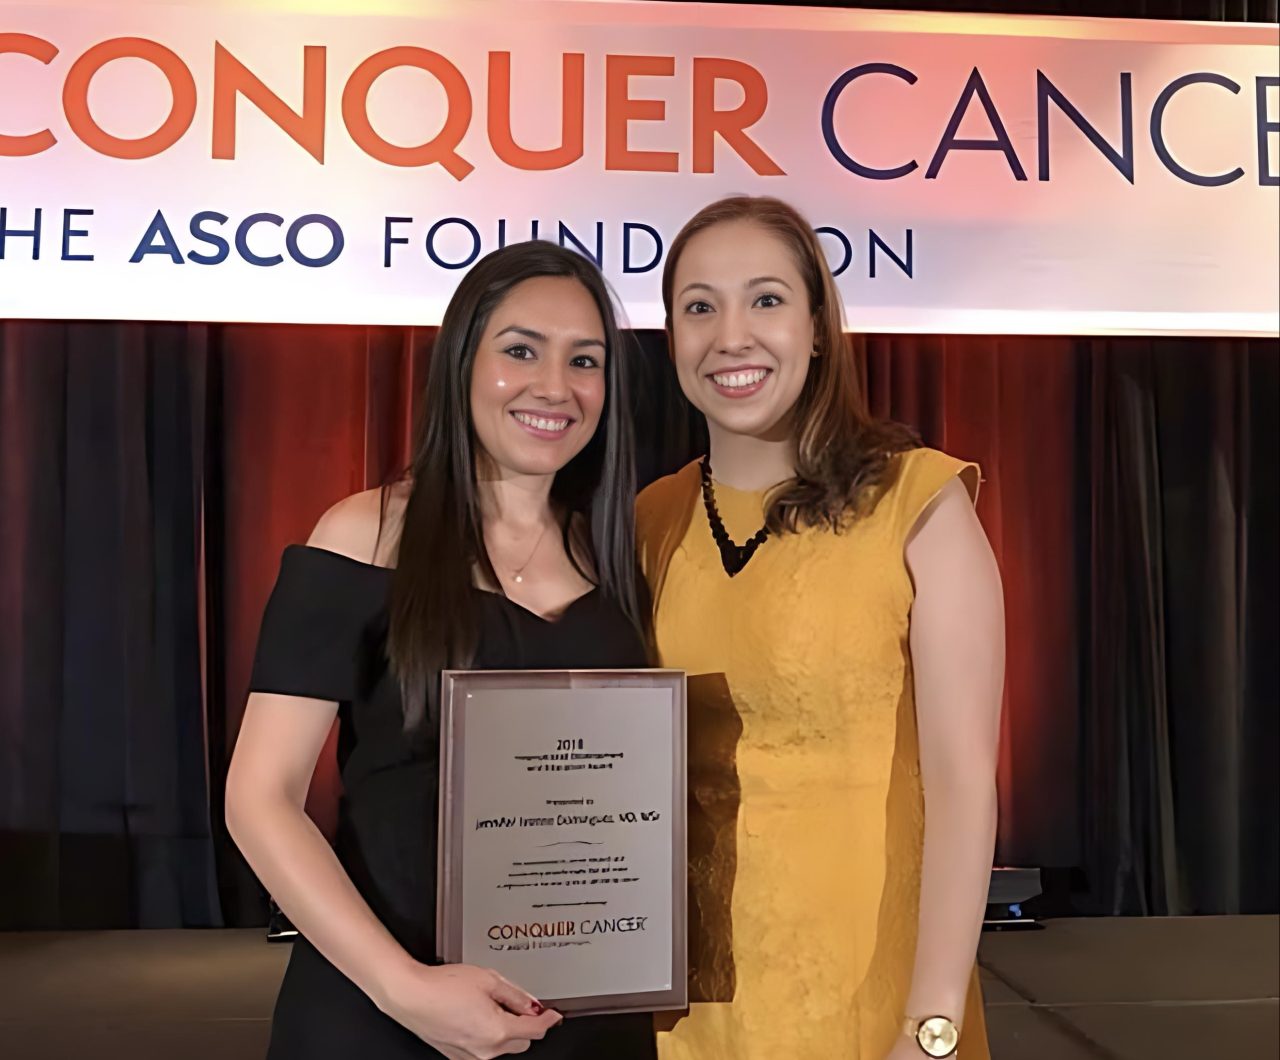 Maite Bourlon: 2013 IDEA awardee at ASCO Conquer Cancer, the ASCO Foundation, and now Chair of the program!